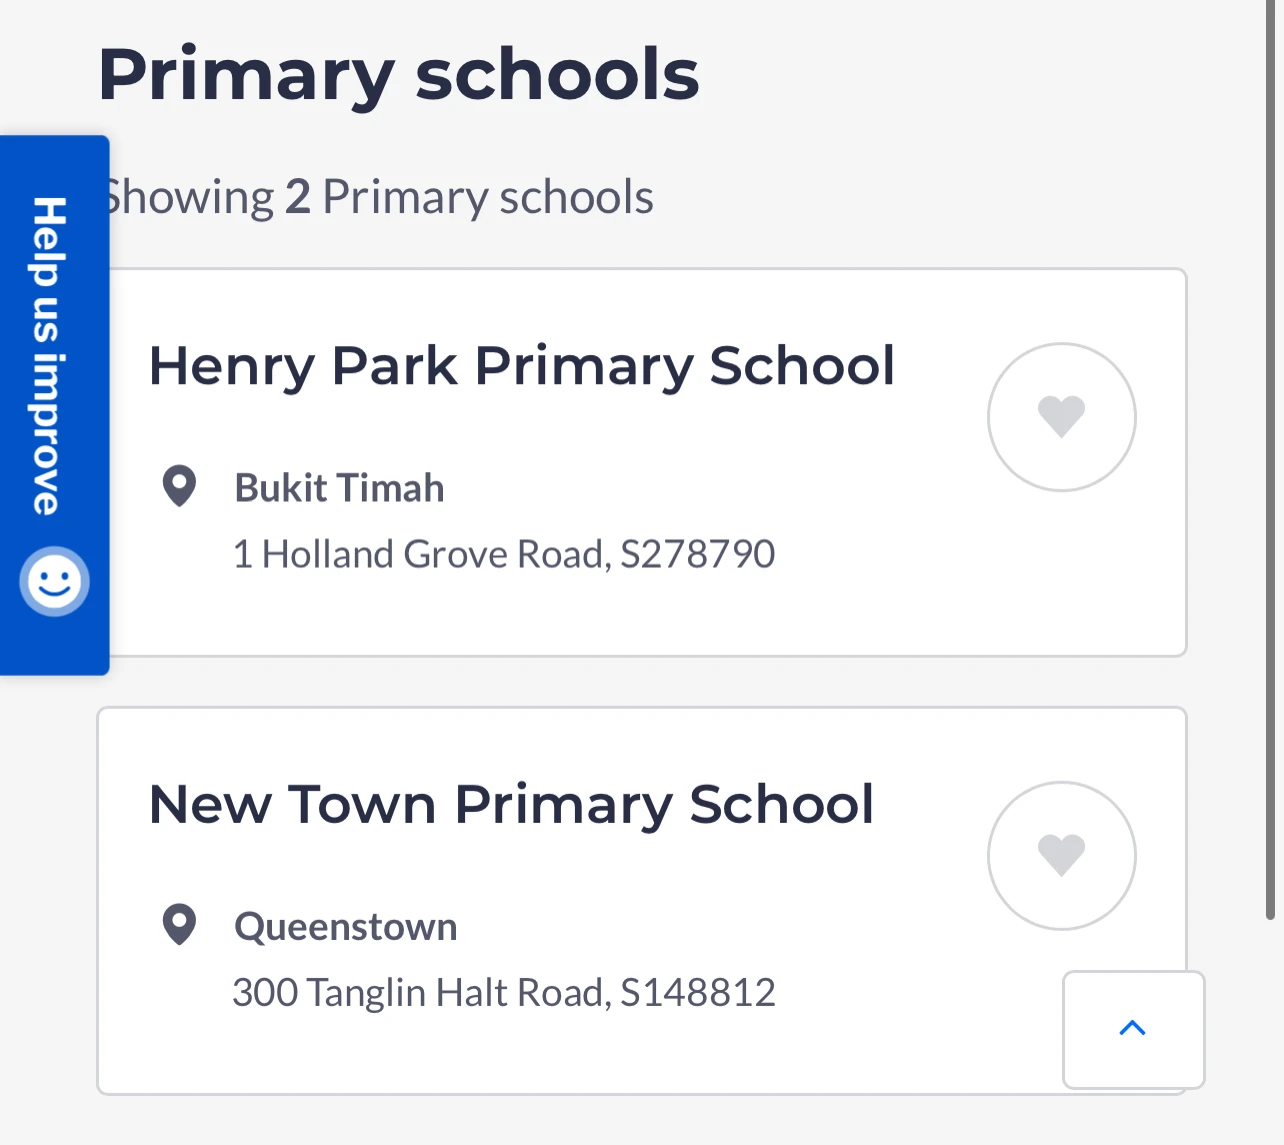 Between 1km to 2km - New Town Primary School Between 1km to 2km - Henry Park Primary School